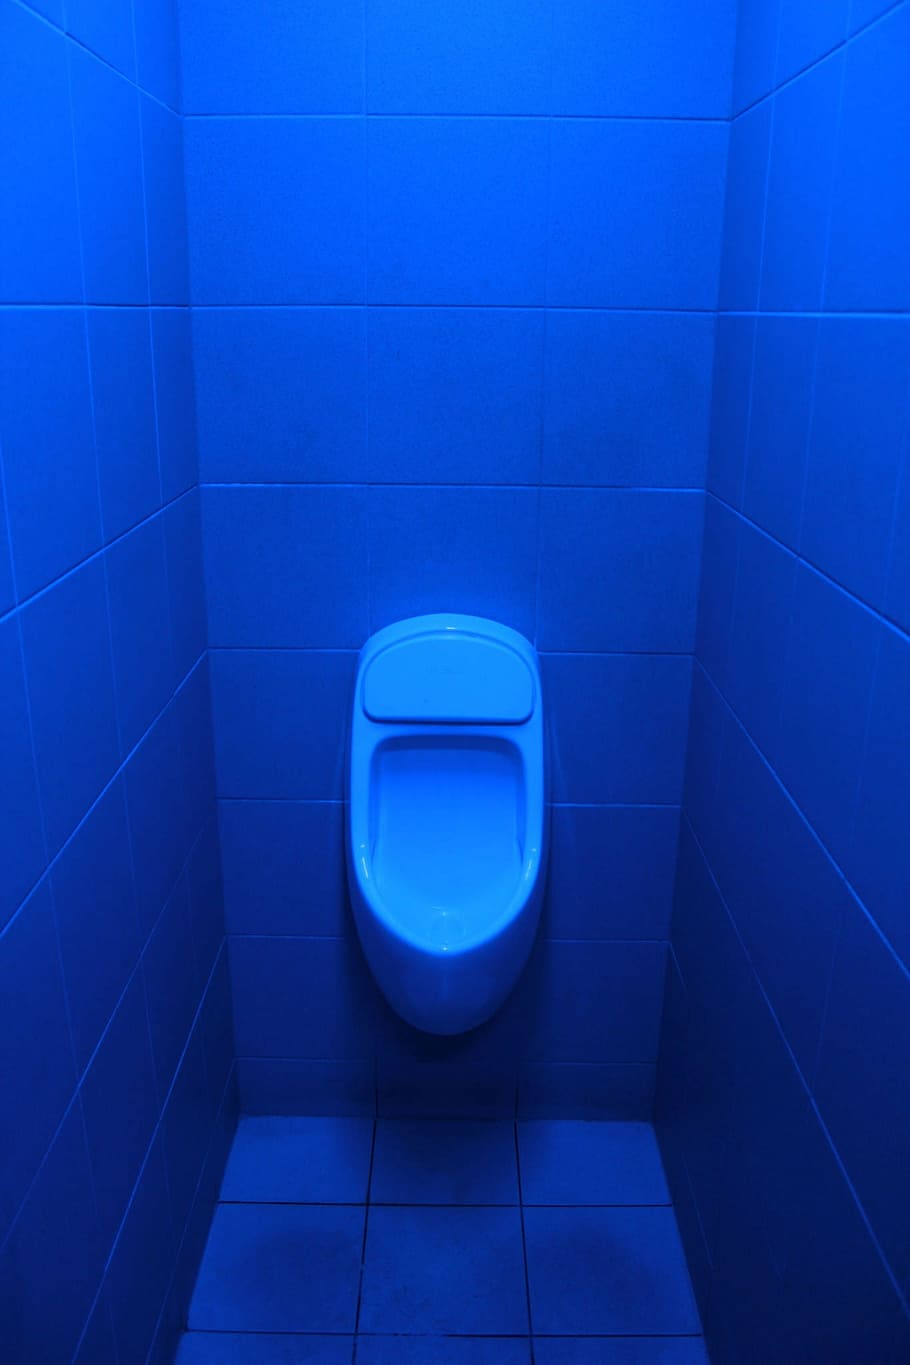 toilet for men, blue oil, background, toilet, man, wc, urinal, latrine, latrines, water room